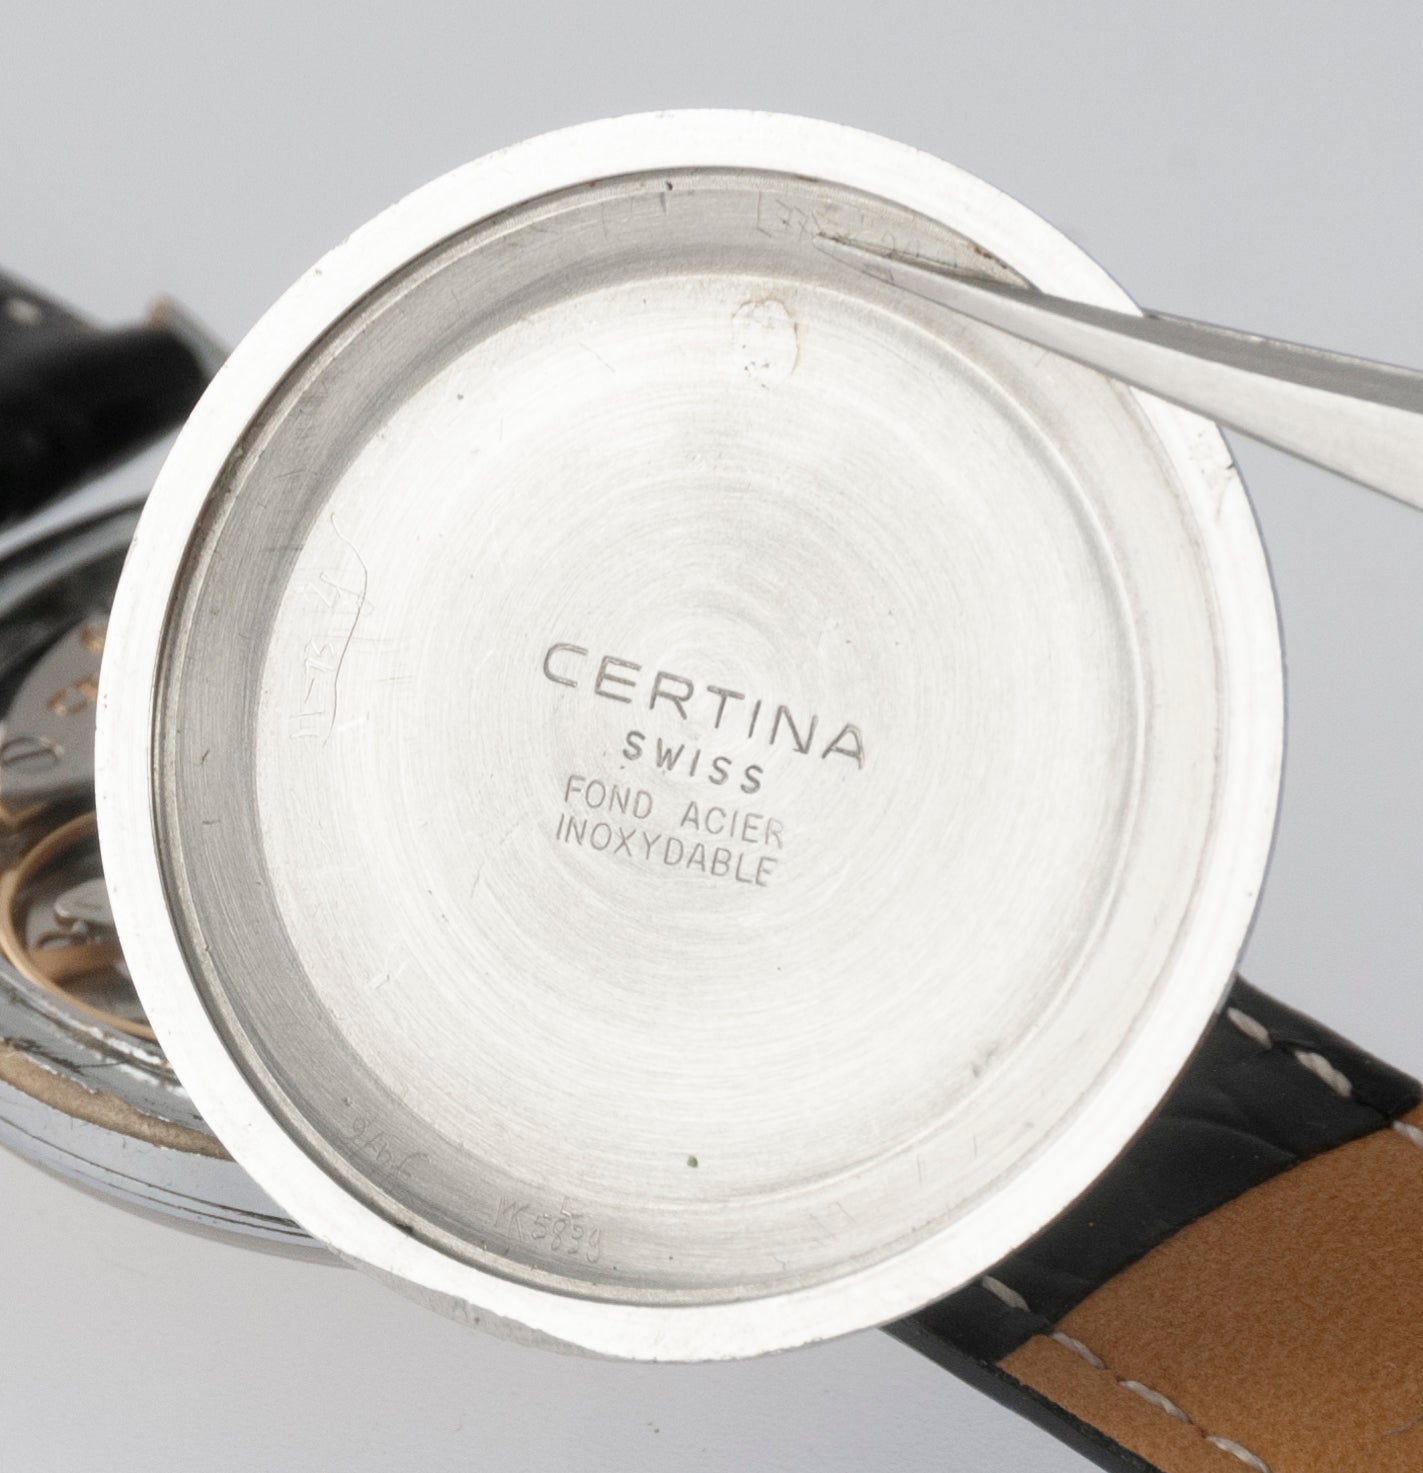 Certina Vintage Steel Chromed Ref: 7002 159